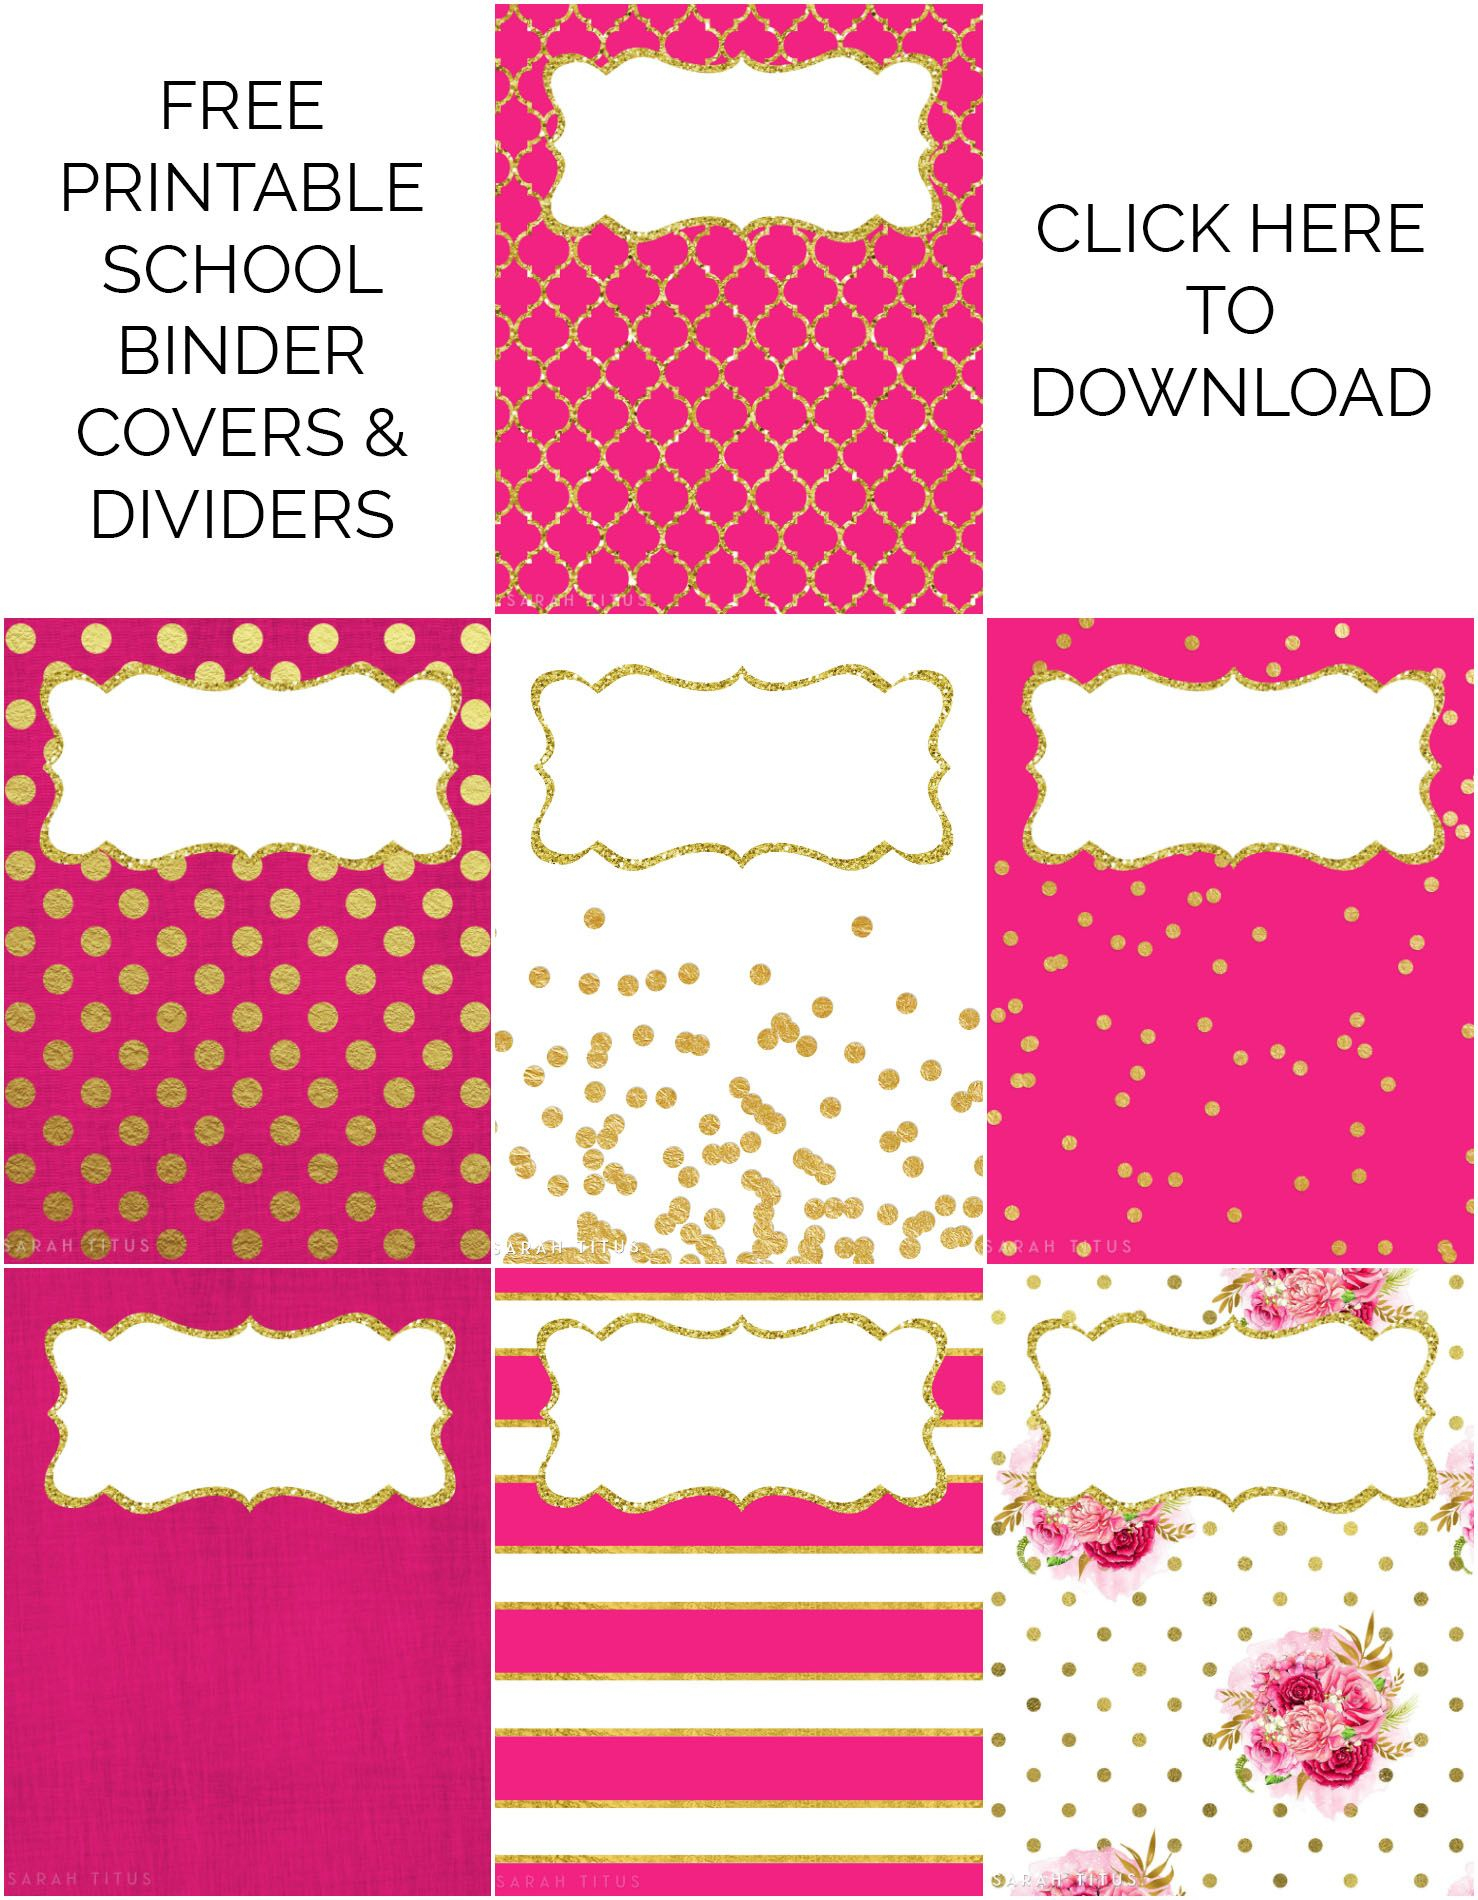 Binder Covers / Dividers Free Printables | Plans | Binder Covers - Free Printable School Binder Covers